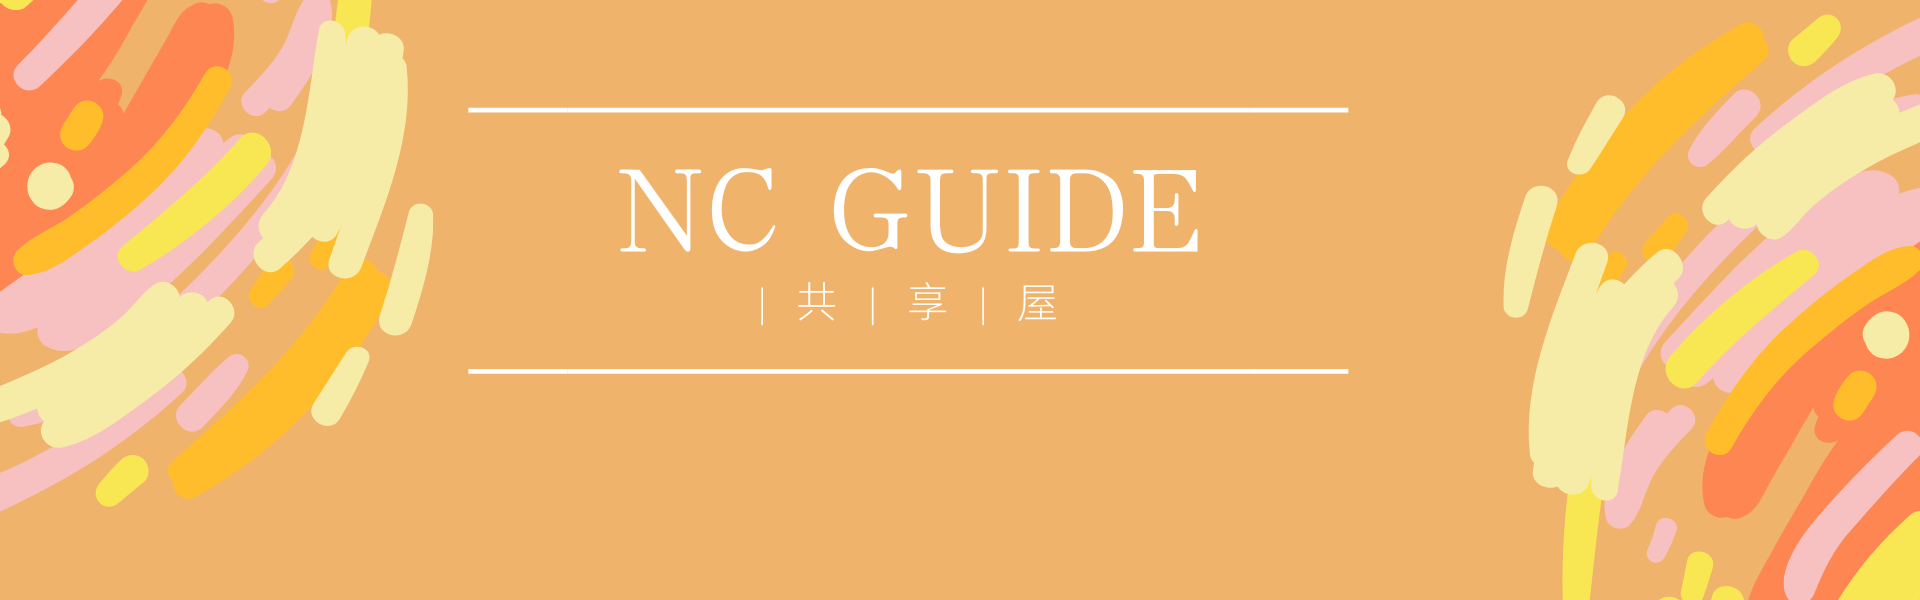 FANUC NC GUIDE PRO 虚拟机版本购买必看 | 共享屋|共享屋